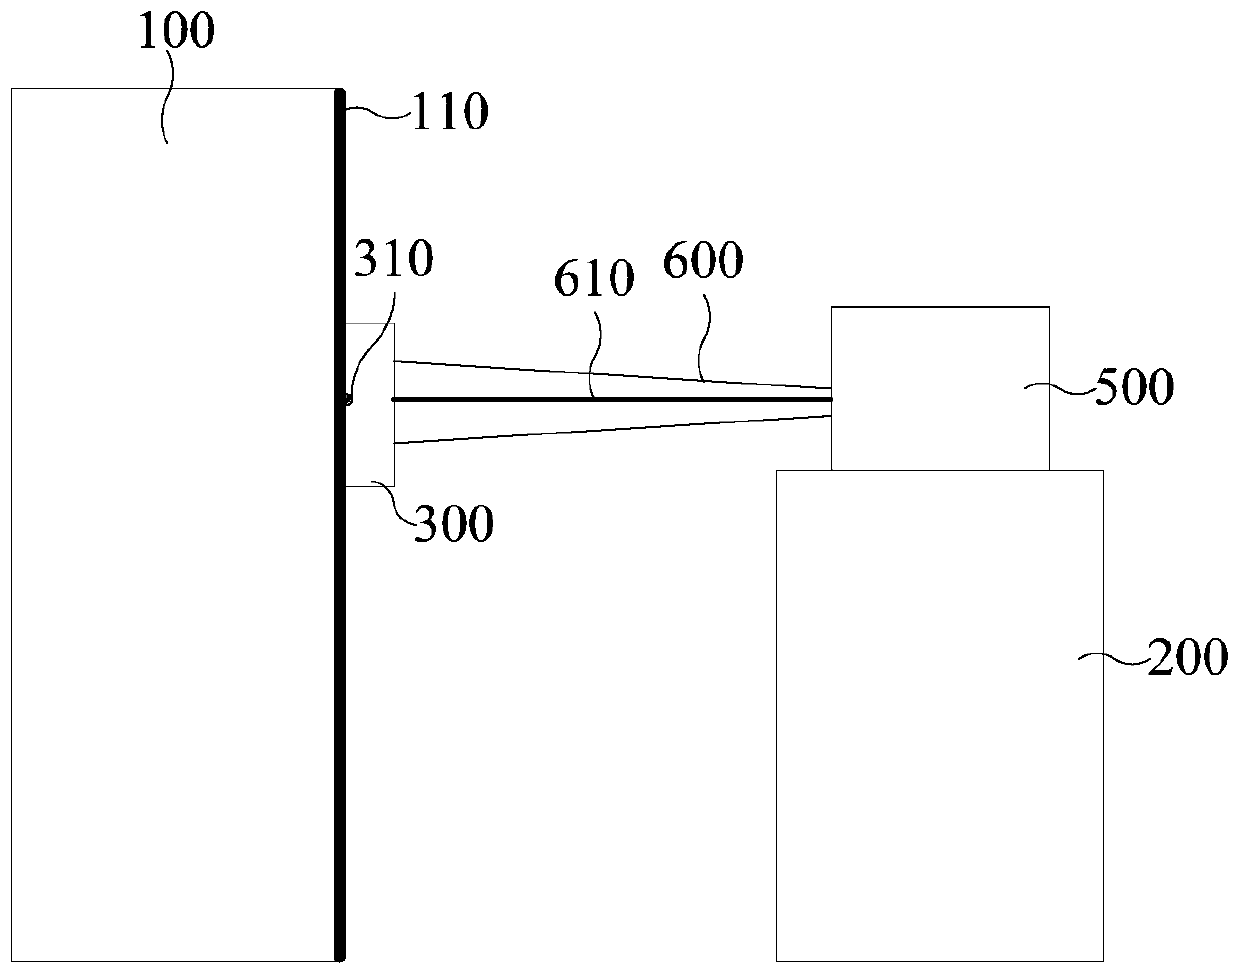 System and method for measuring deflection angle error of laser radar